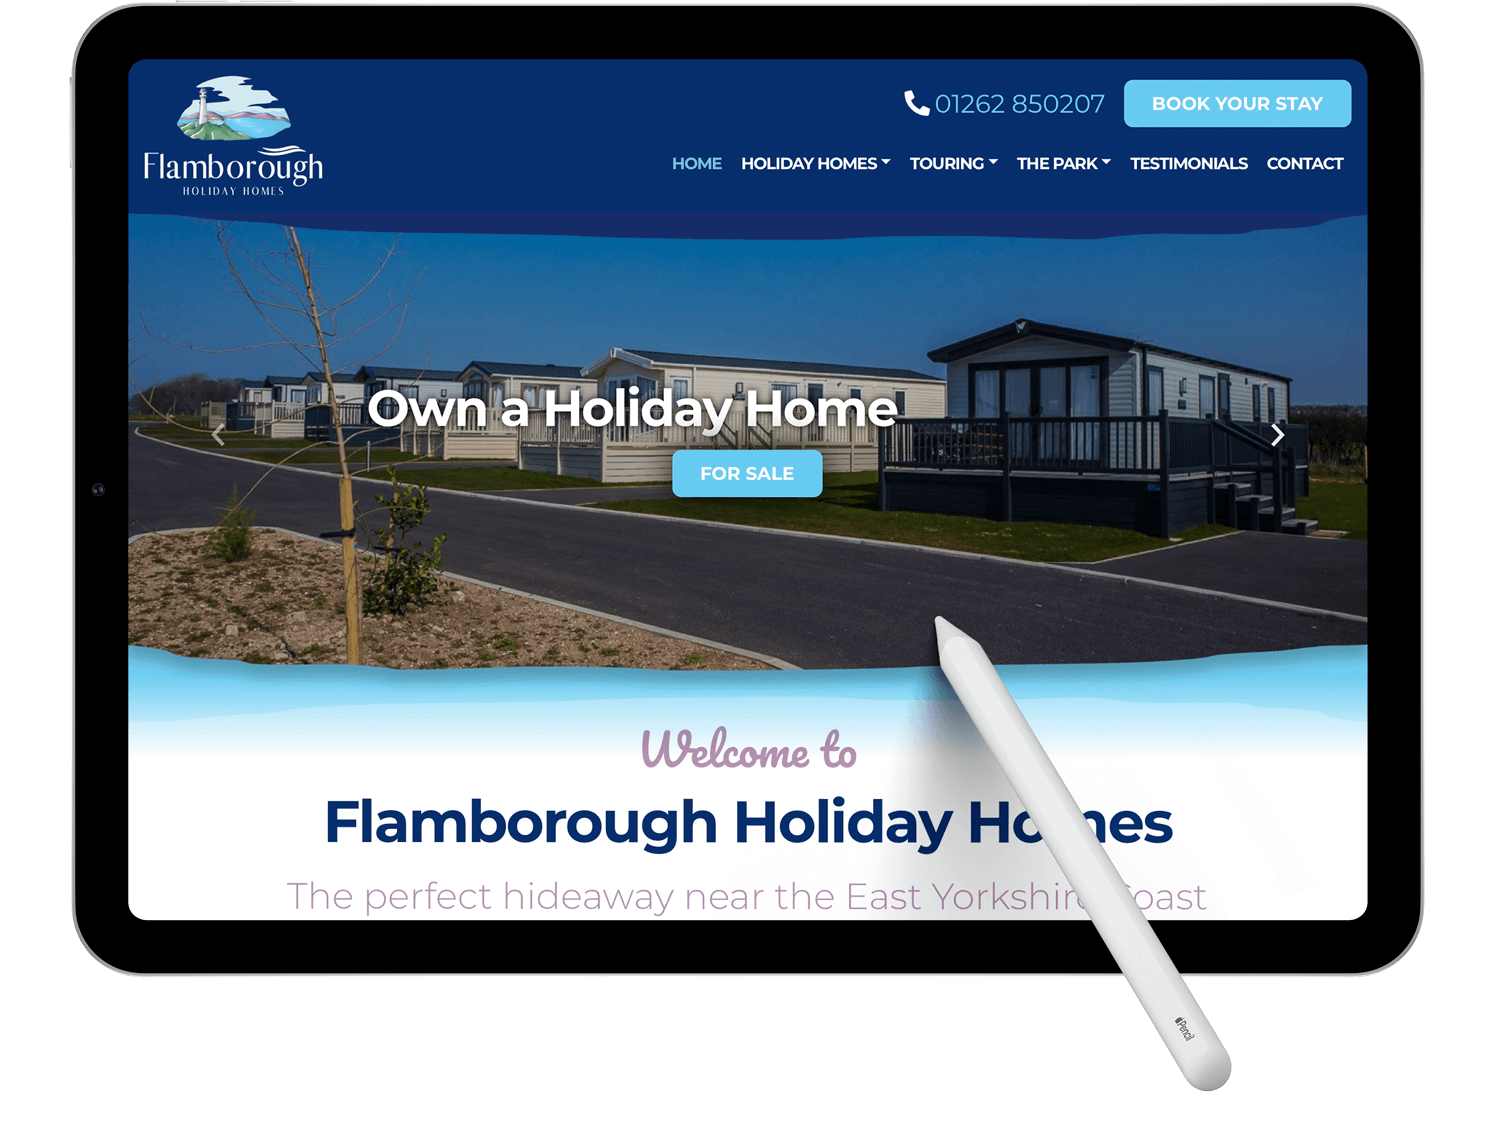 Flamborough Holiday Homes website